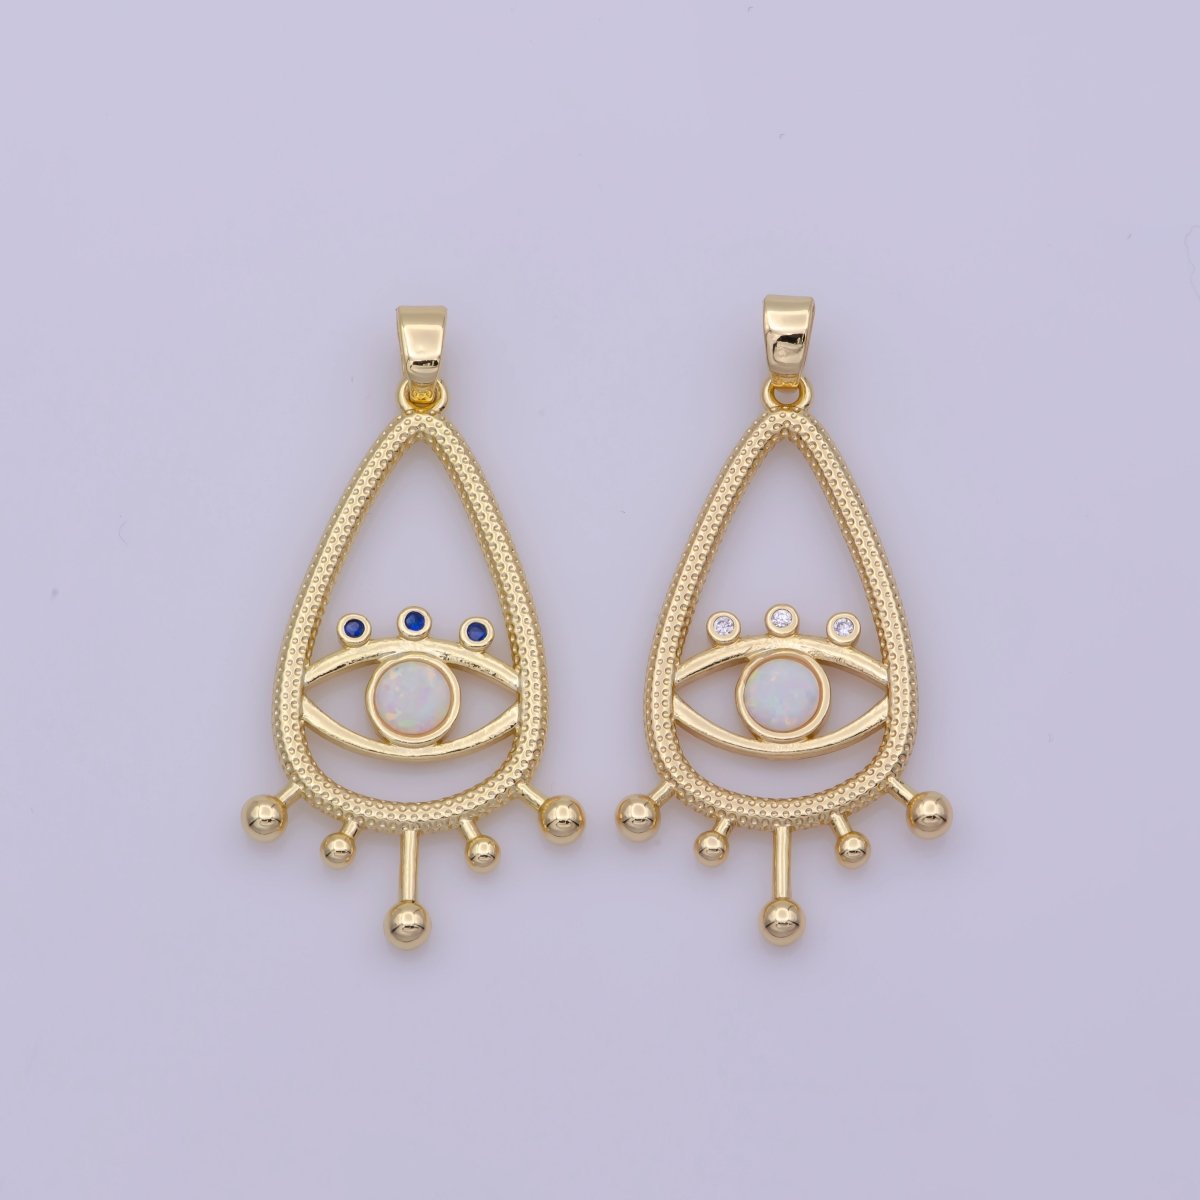 14K Gold Filled Evil Eye Gold White Opal Talisman Charm Pendant, Teardrop Pendant Lucky Medallion Pendant For Earring DIY Jewelry Making N-495 N-496 - DLUXCA